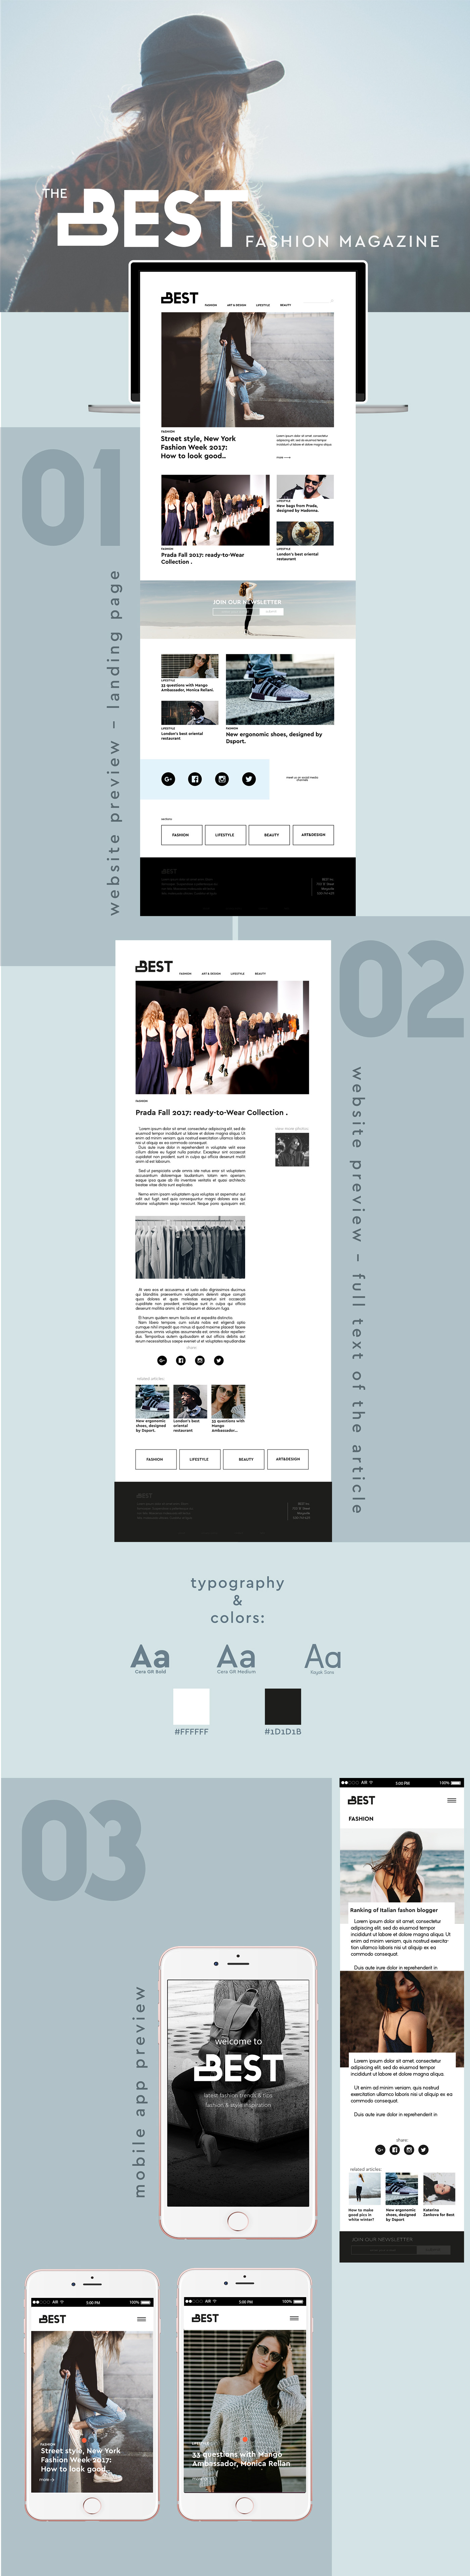 Interaction design  ux UI fashion magazine interaction Website